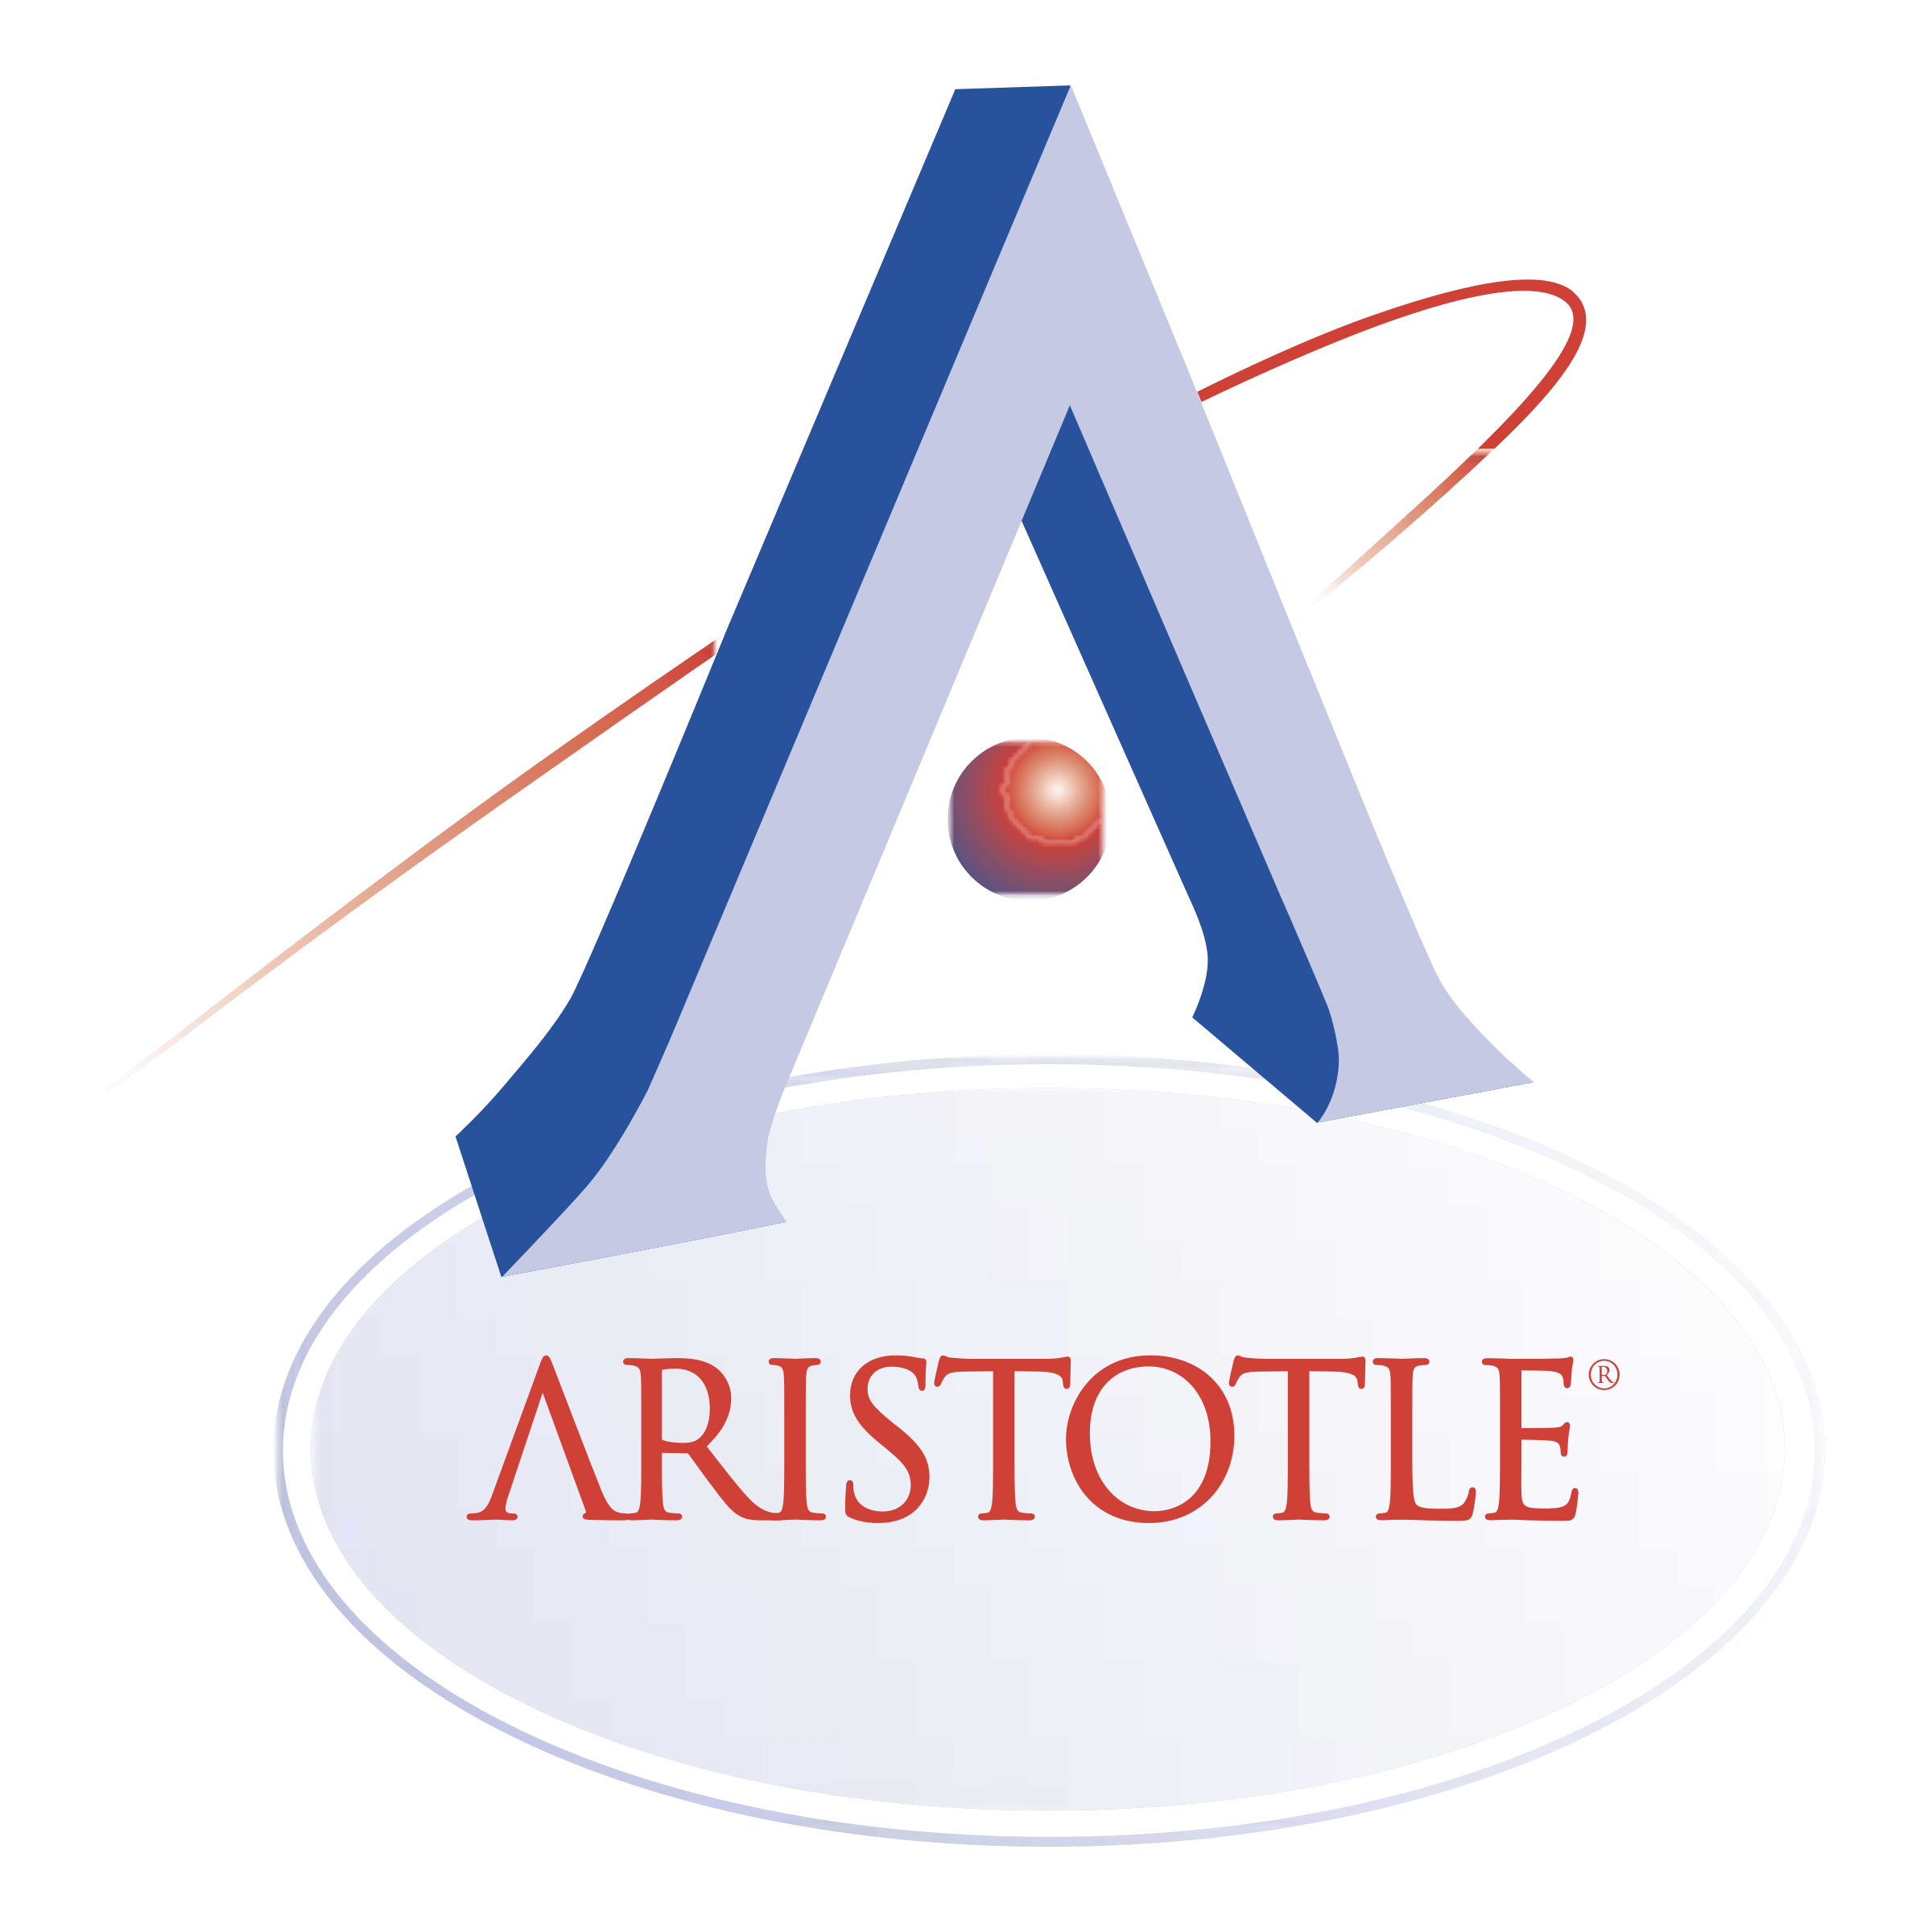 Aristotle Logo - Aristotle Logo PNG Transparent & SVG Vector - Freebie Supply